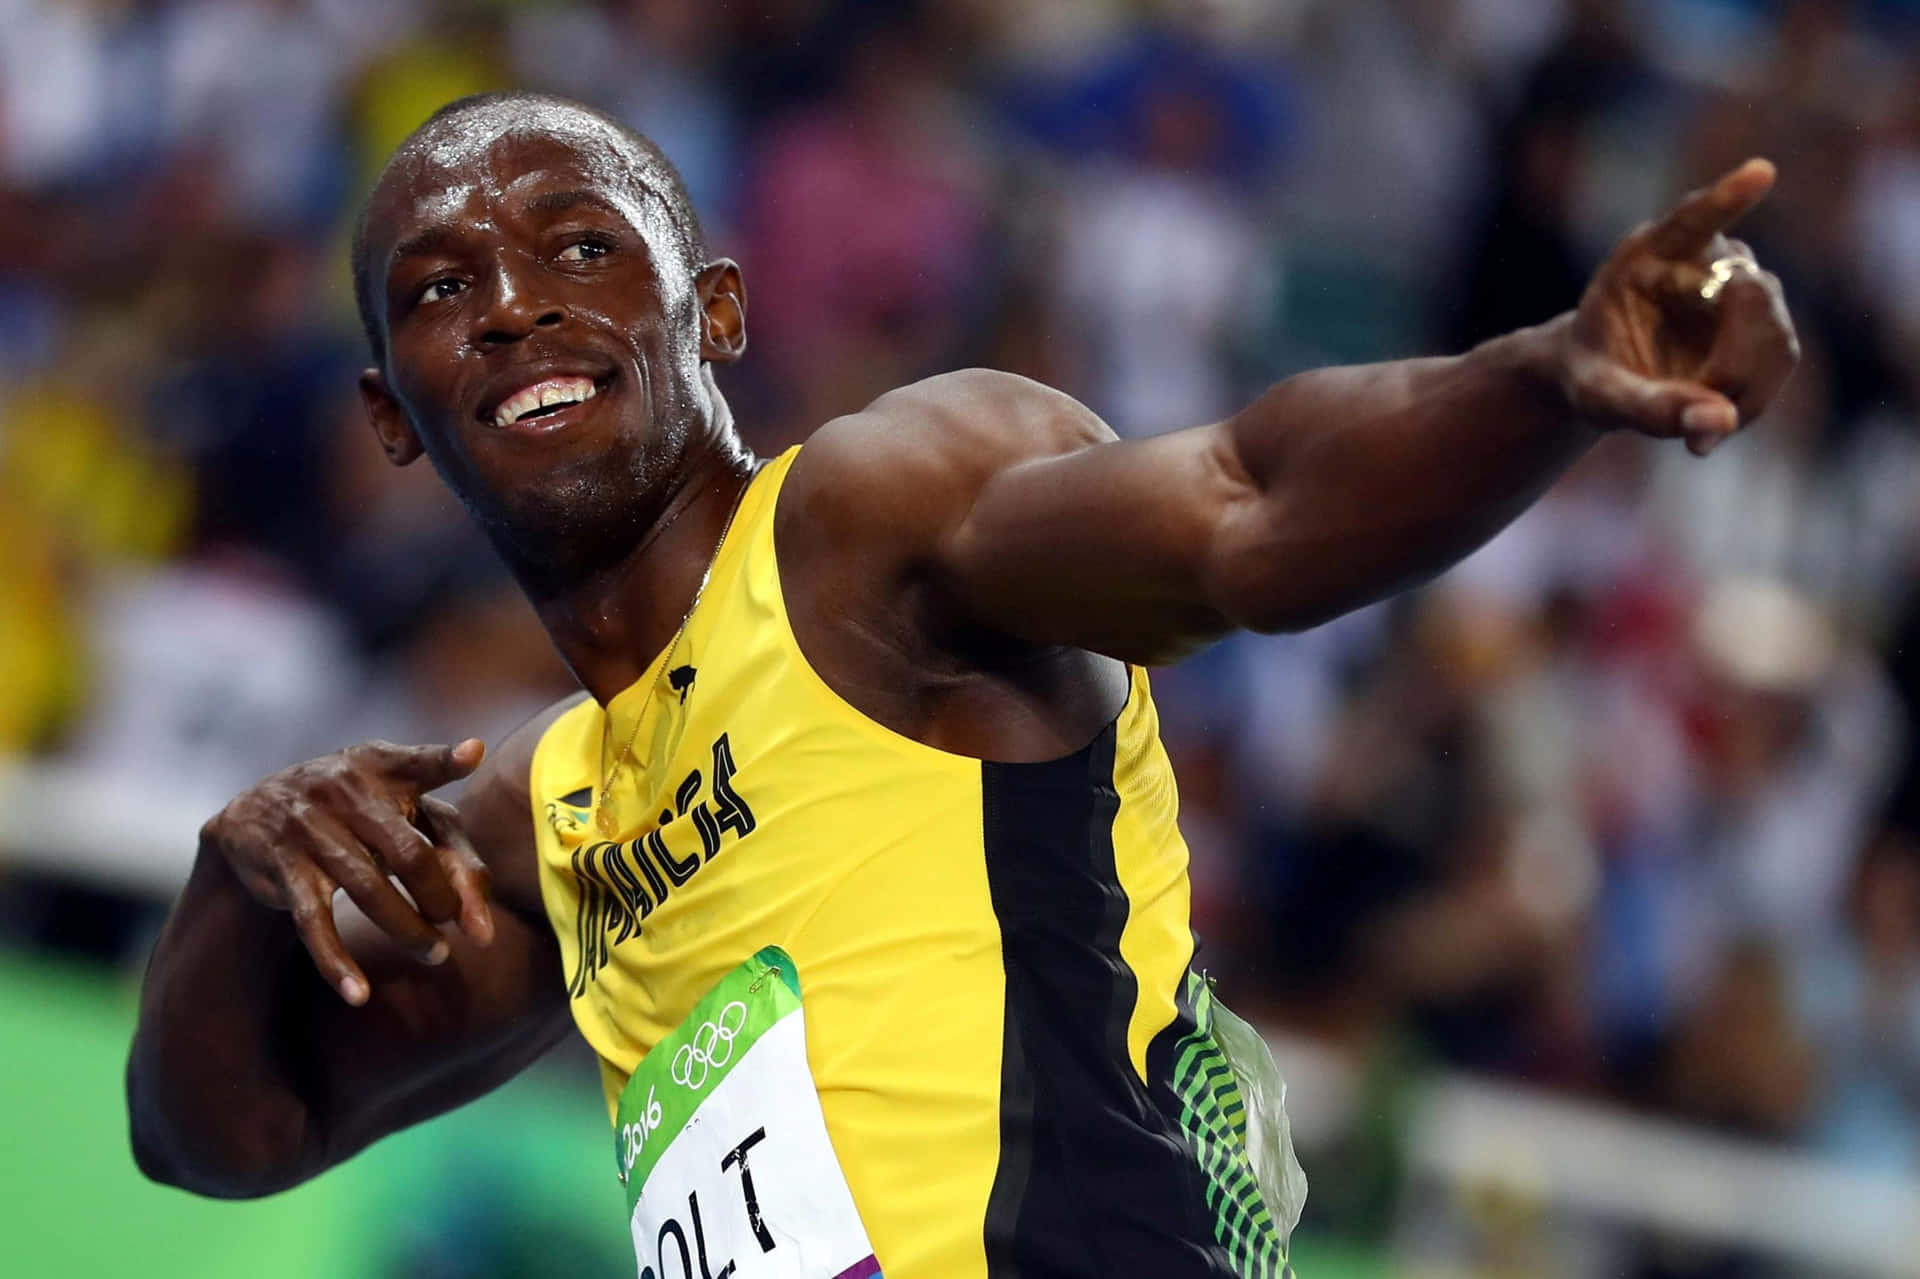 Usain Bolt smiler og peger til højre feature wallpaper. Wallpaper